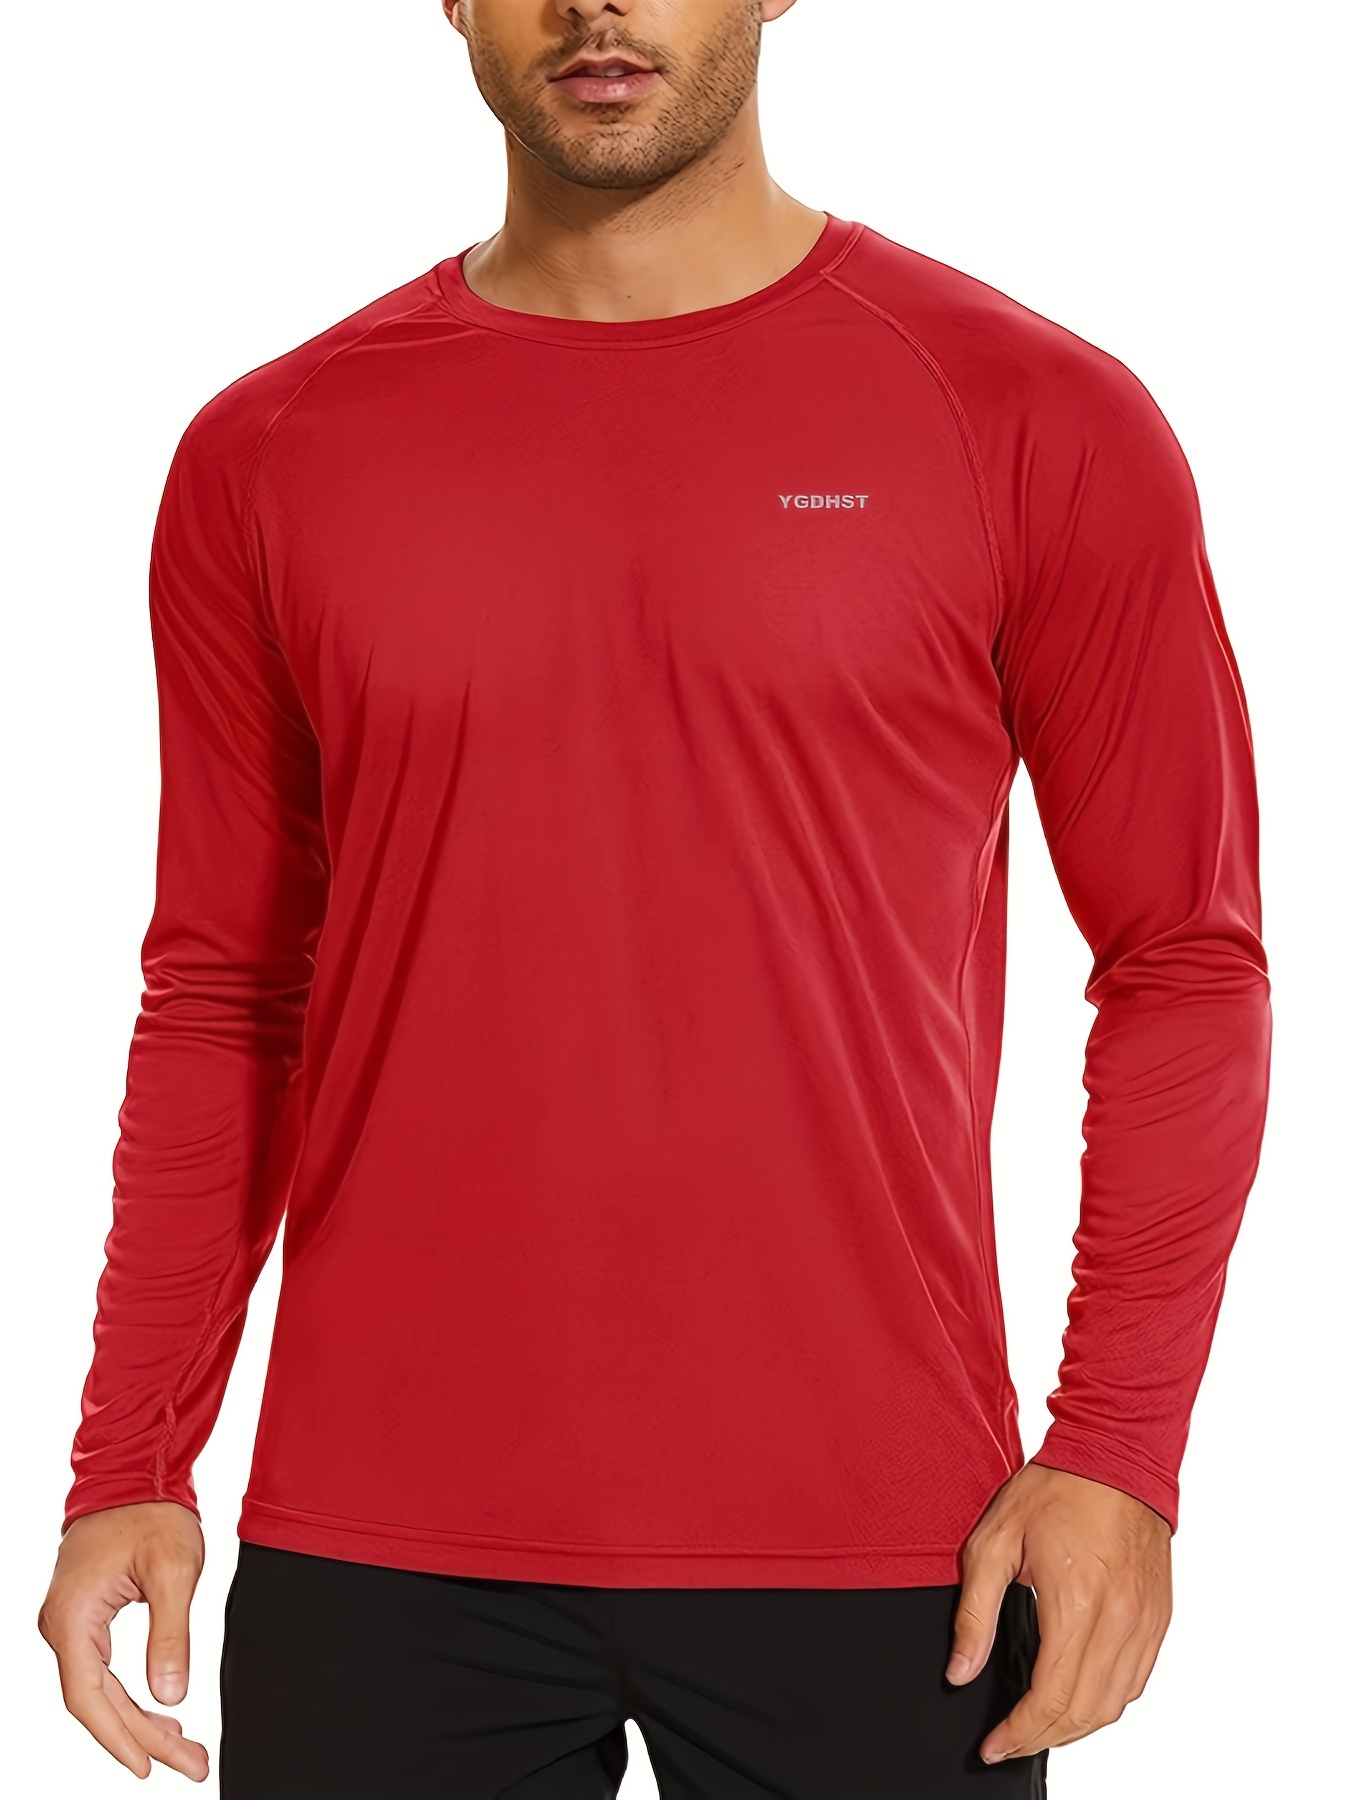 SURFEASY Men's Long Sleeve Rash Vest Swim Shirt, Upf 50+ Sun Protection Quick Dry Surf Swimming Fishing Hiking Shirts T-Shirt